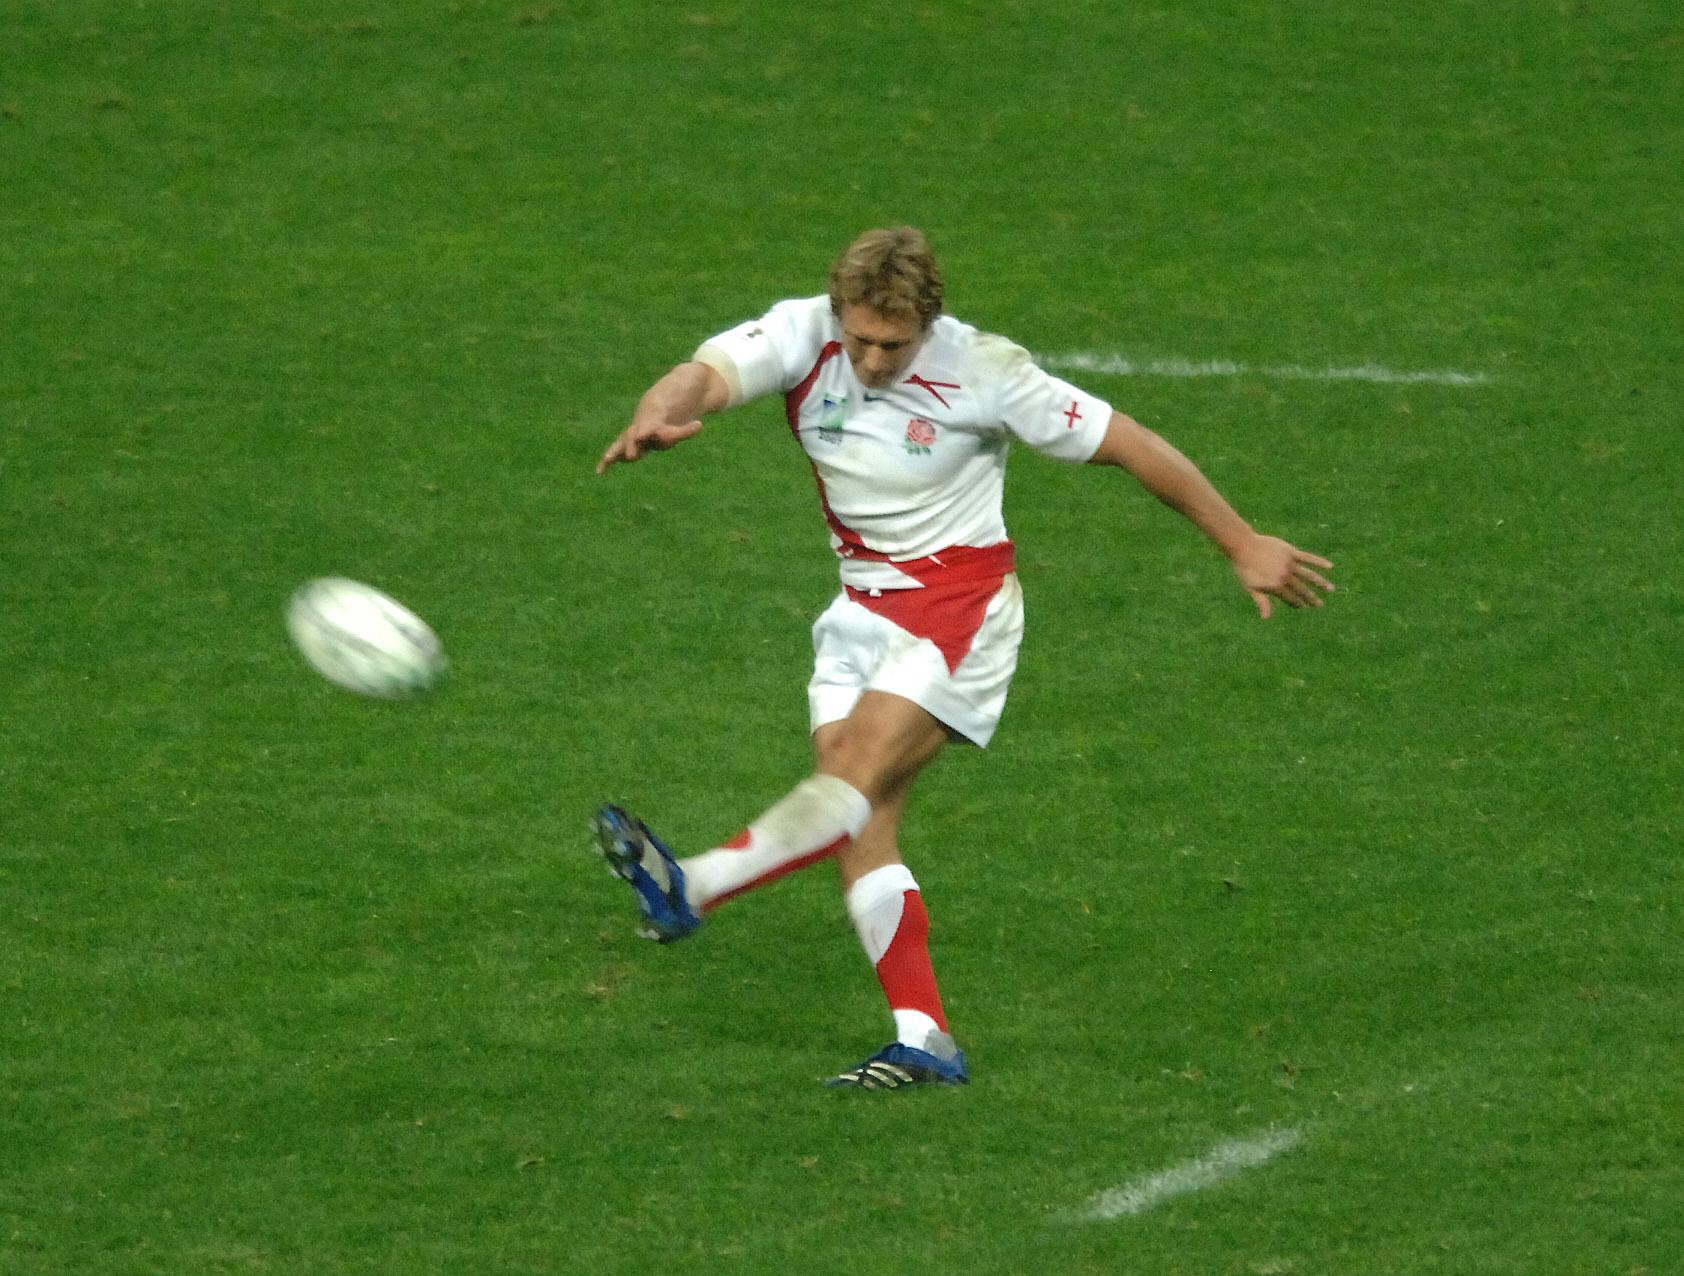 Jonny Wilkinson kicks the drop goal that secured England's 2003 World Cup win